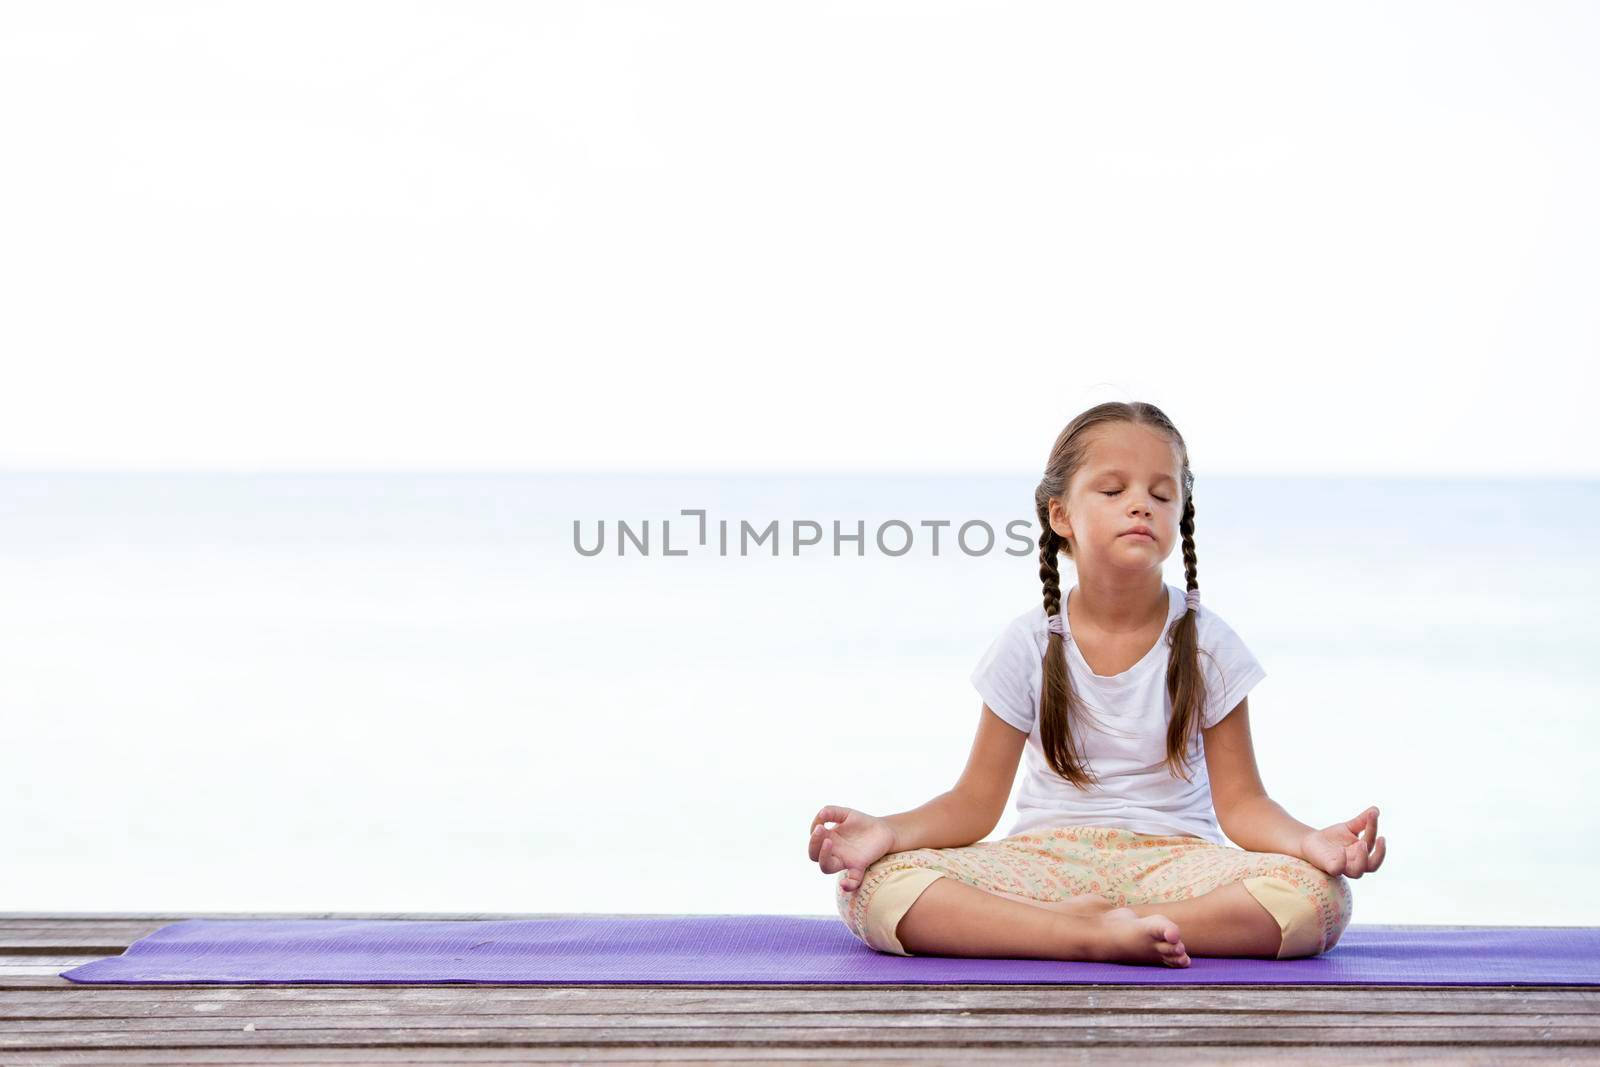 Child doing exercise on platform outdoors. Healthy ocean lifestyle. Yoga girl